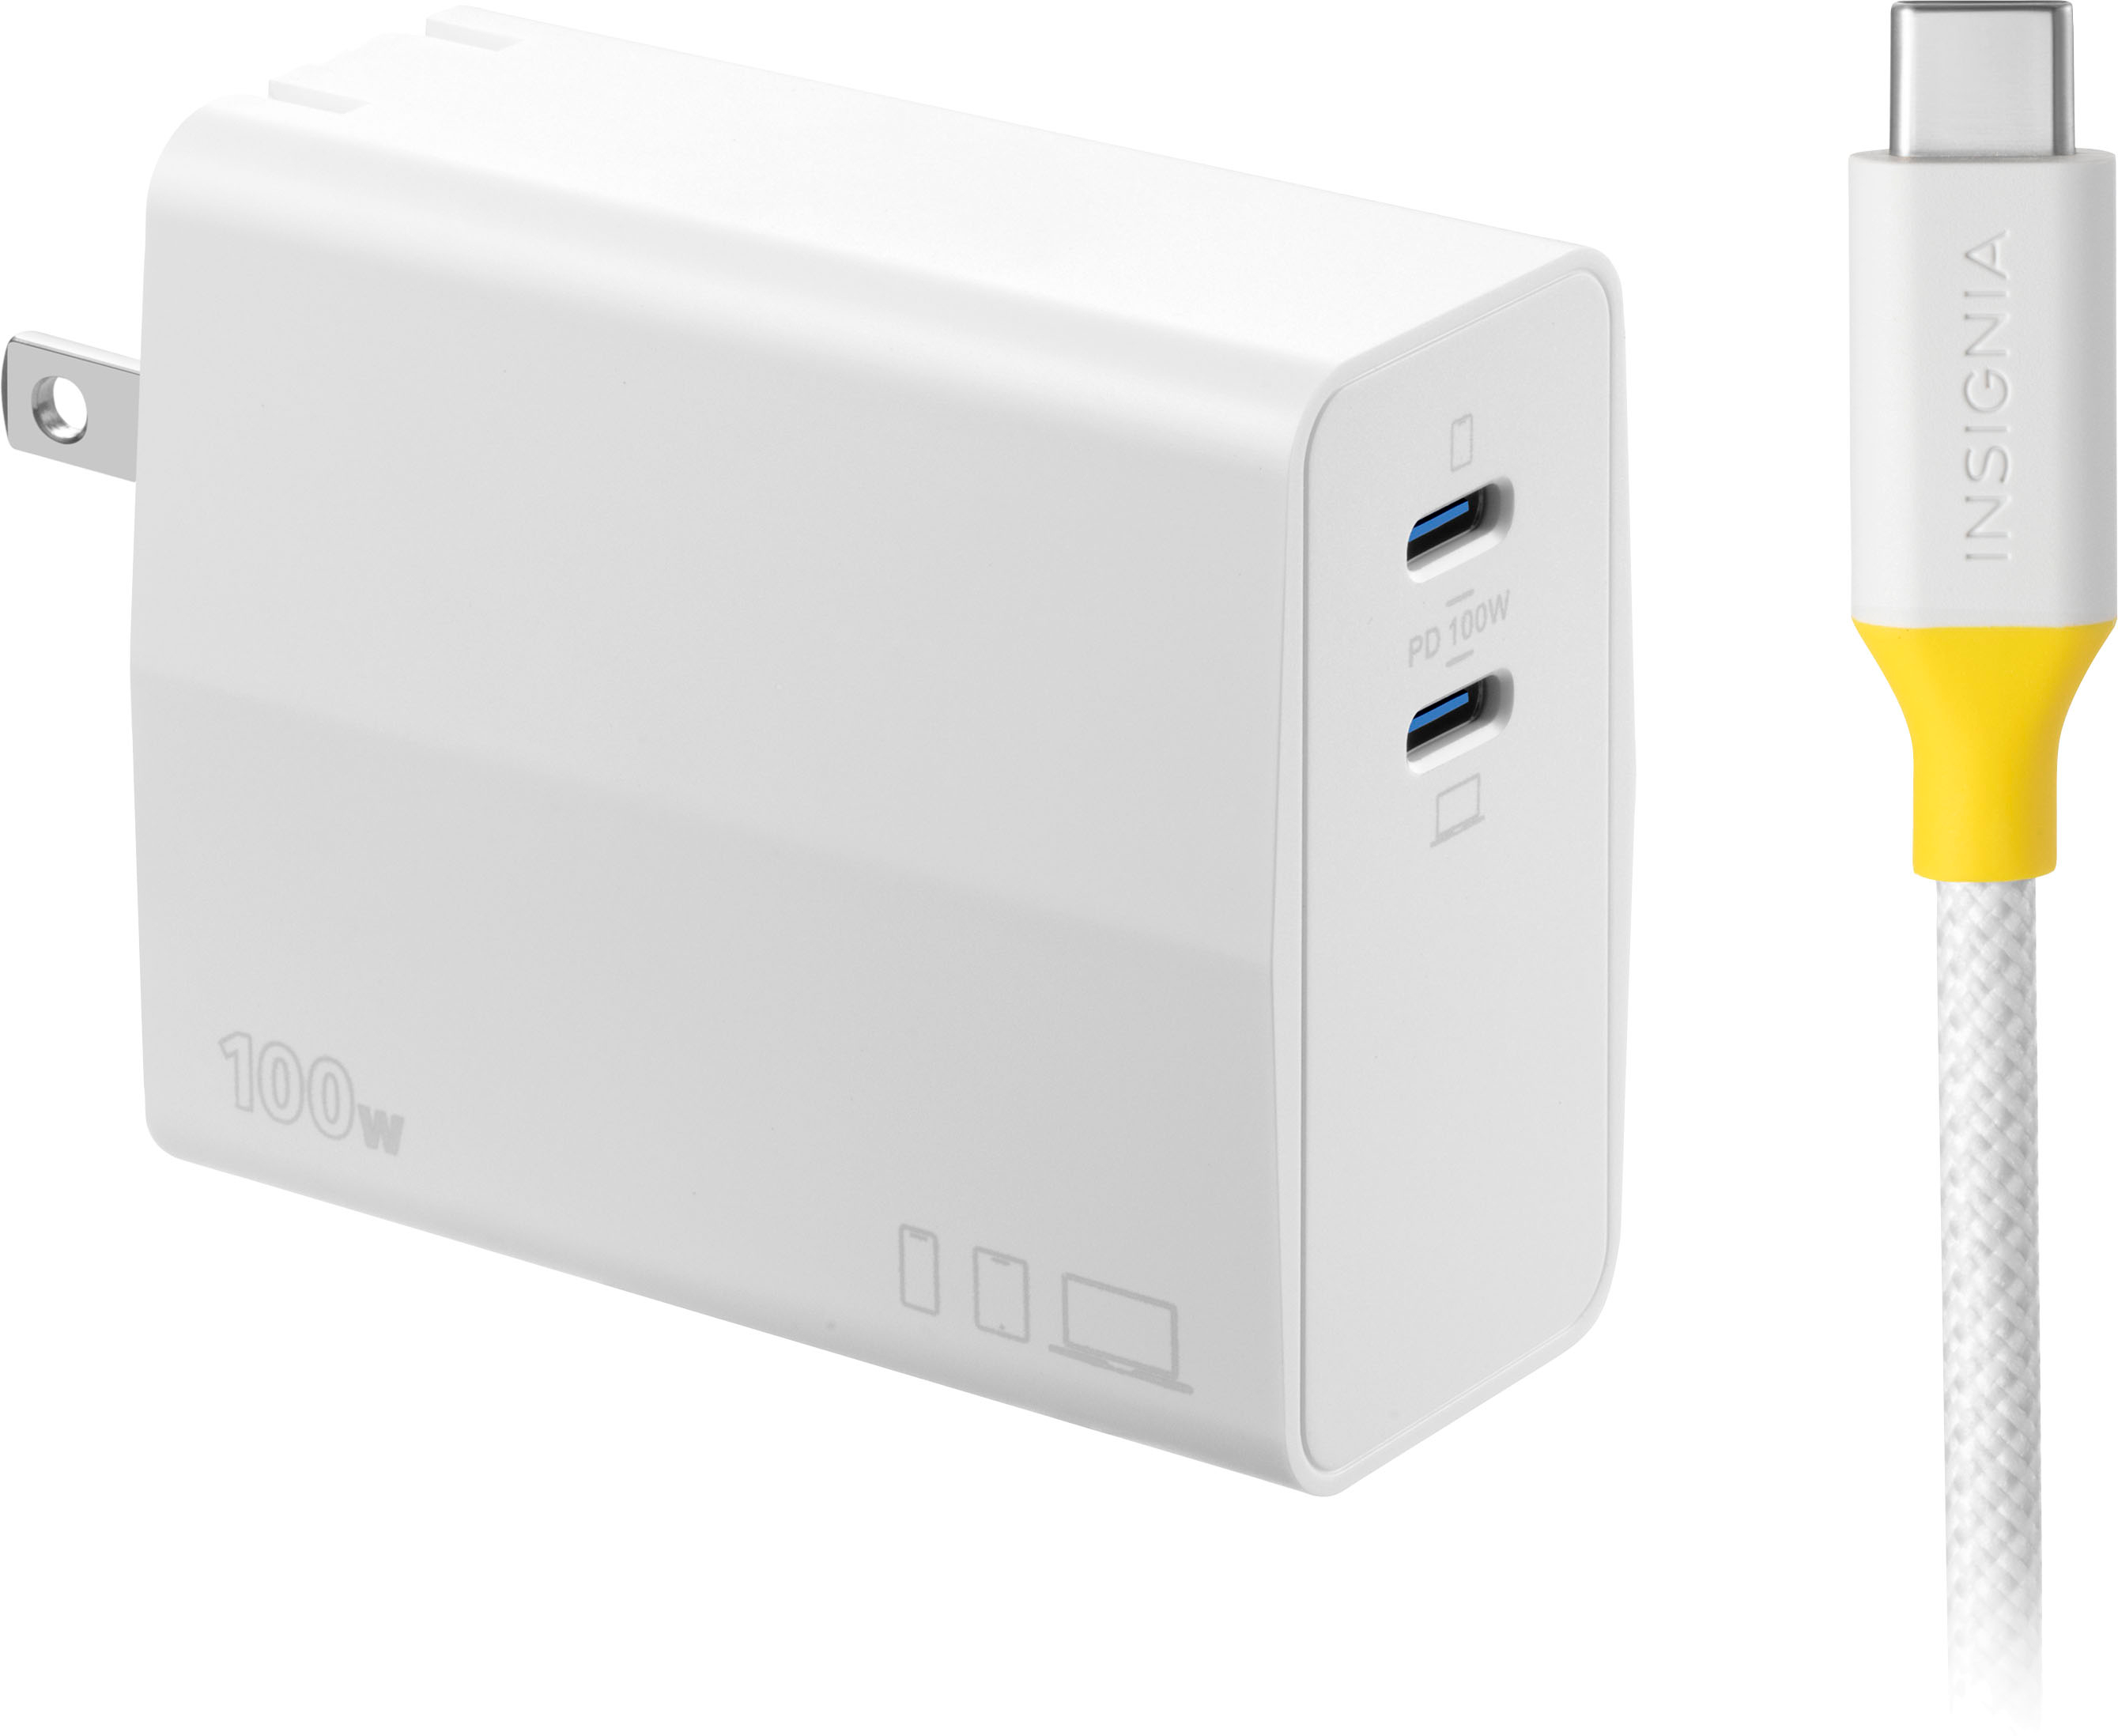 Apple Macbook M1/M2 Power Bank 100W PD USB-C